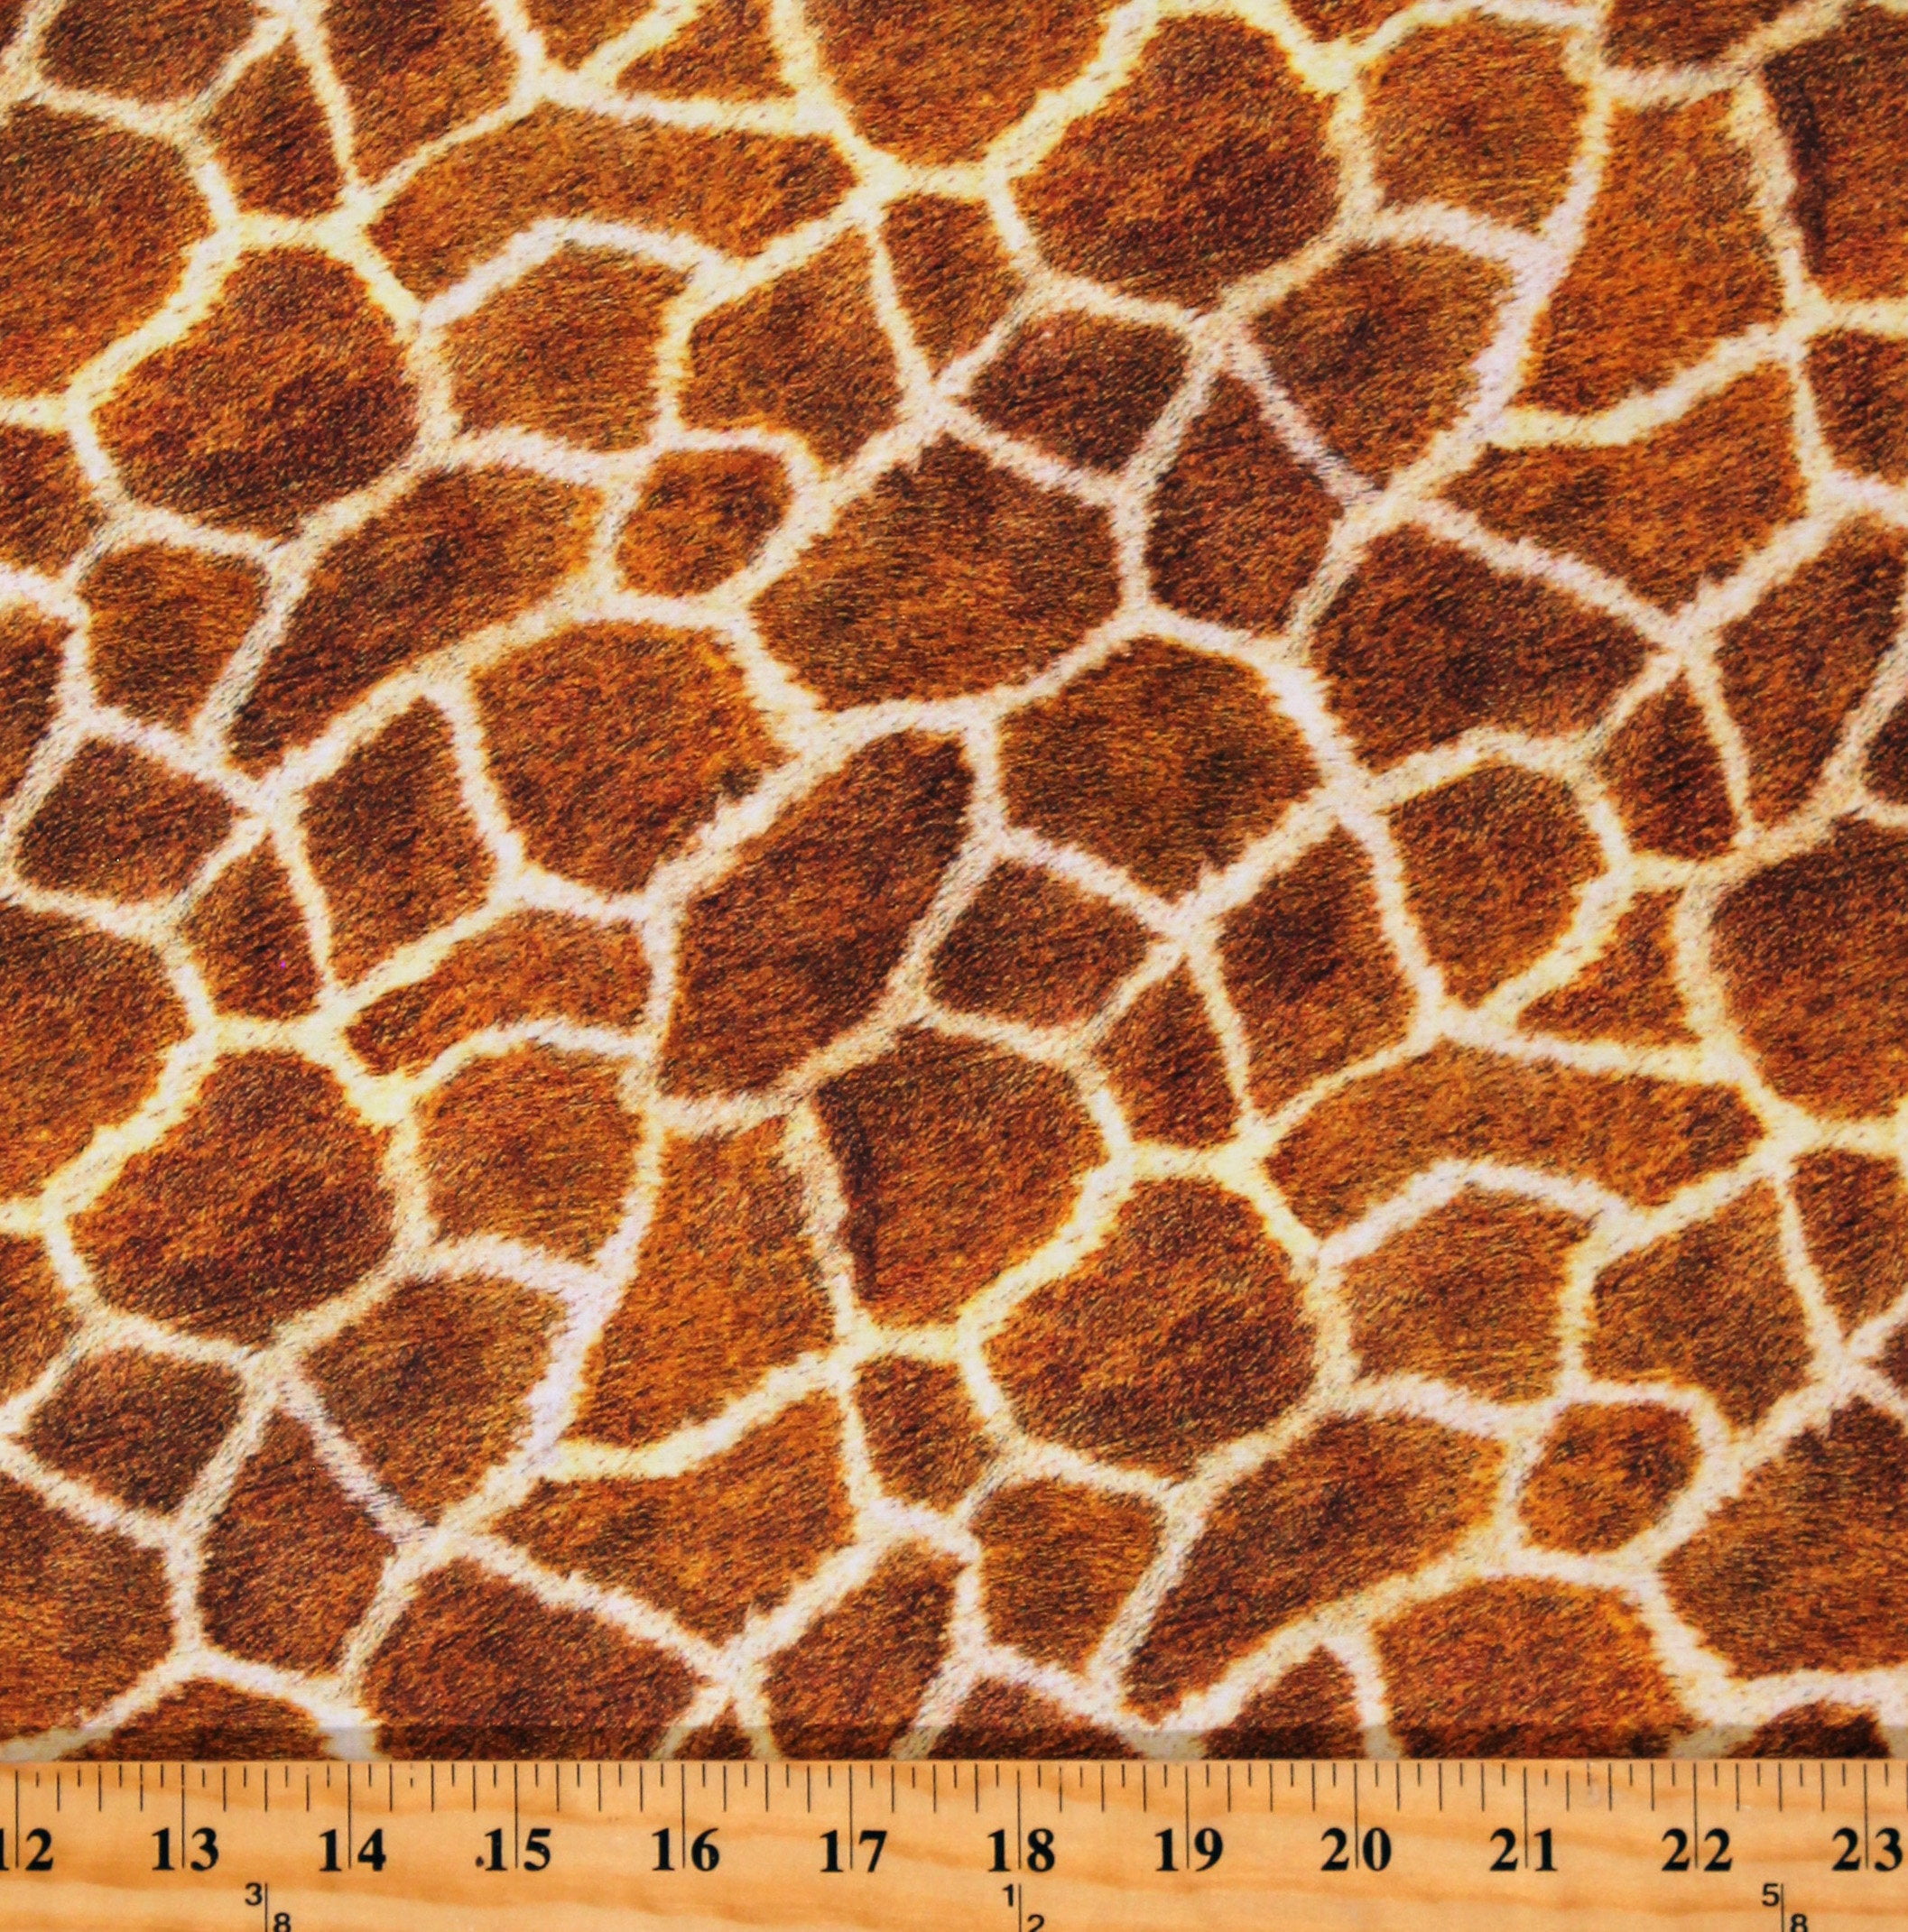 custom fabric fabric by the yard custom fabric Moon fabric cotton fabric Giraffe fabric spandex fabric fabric by the half yard